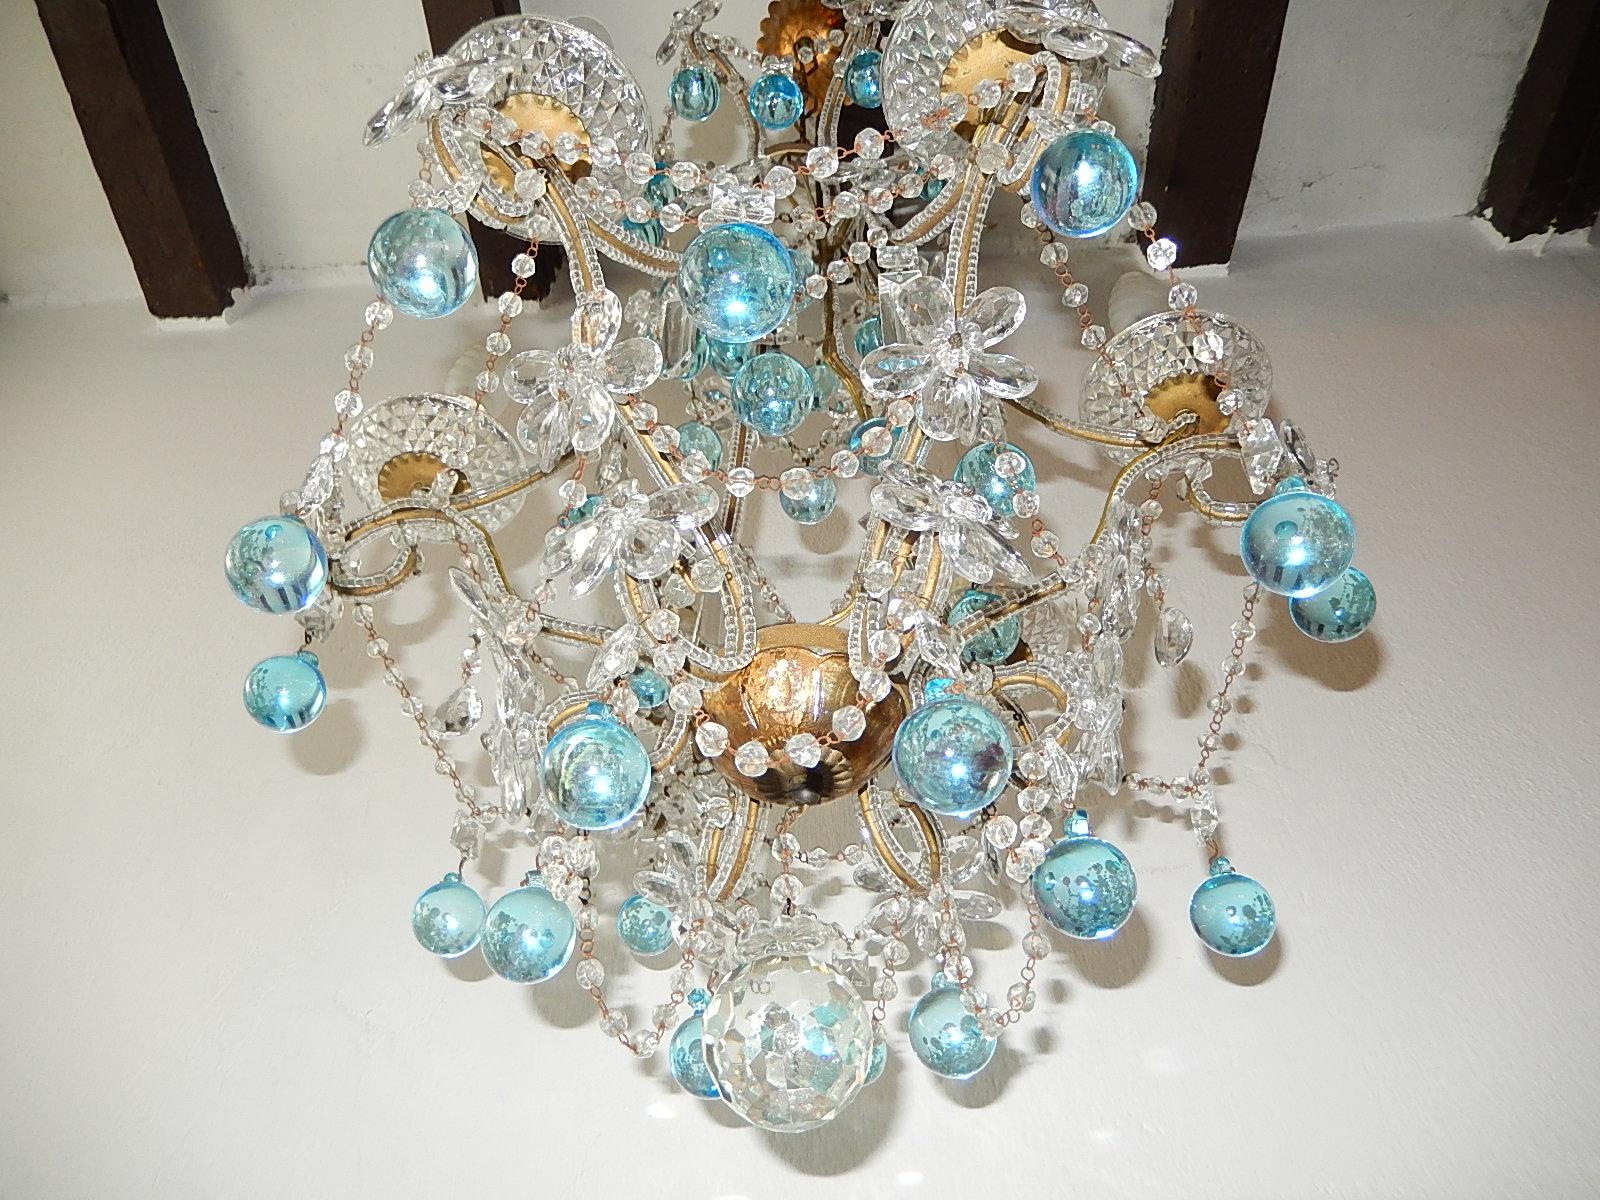 Aqua Blue French Maison Baguès Style Beaded Crystal Prisms & Flowers Chandelier 1